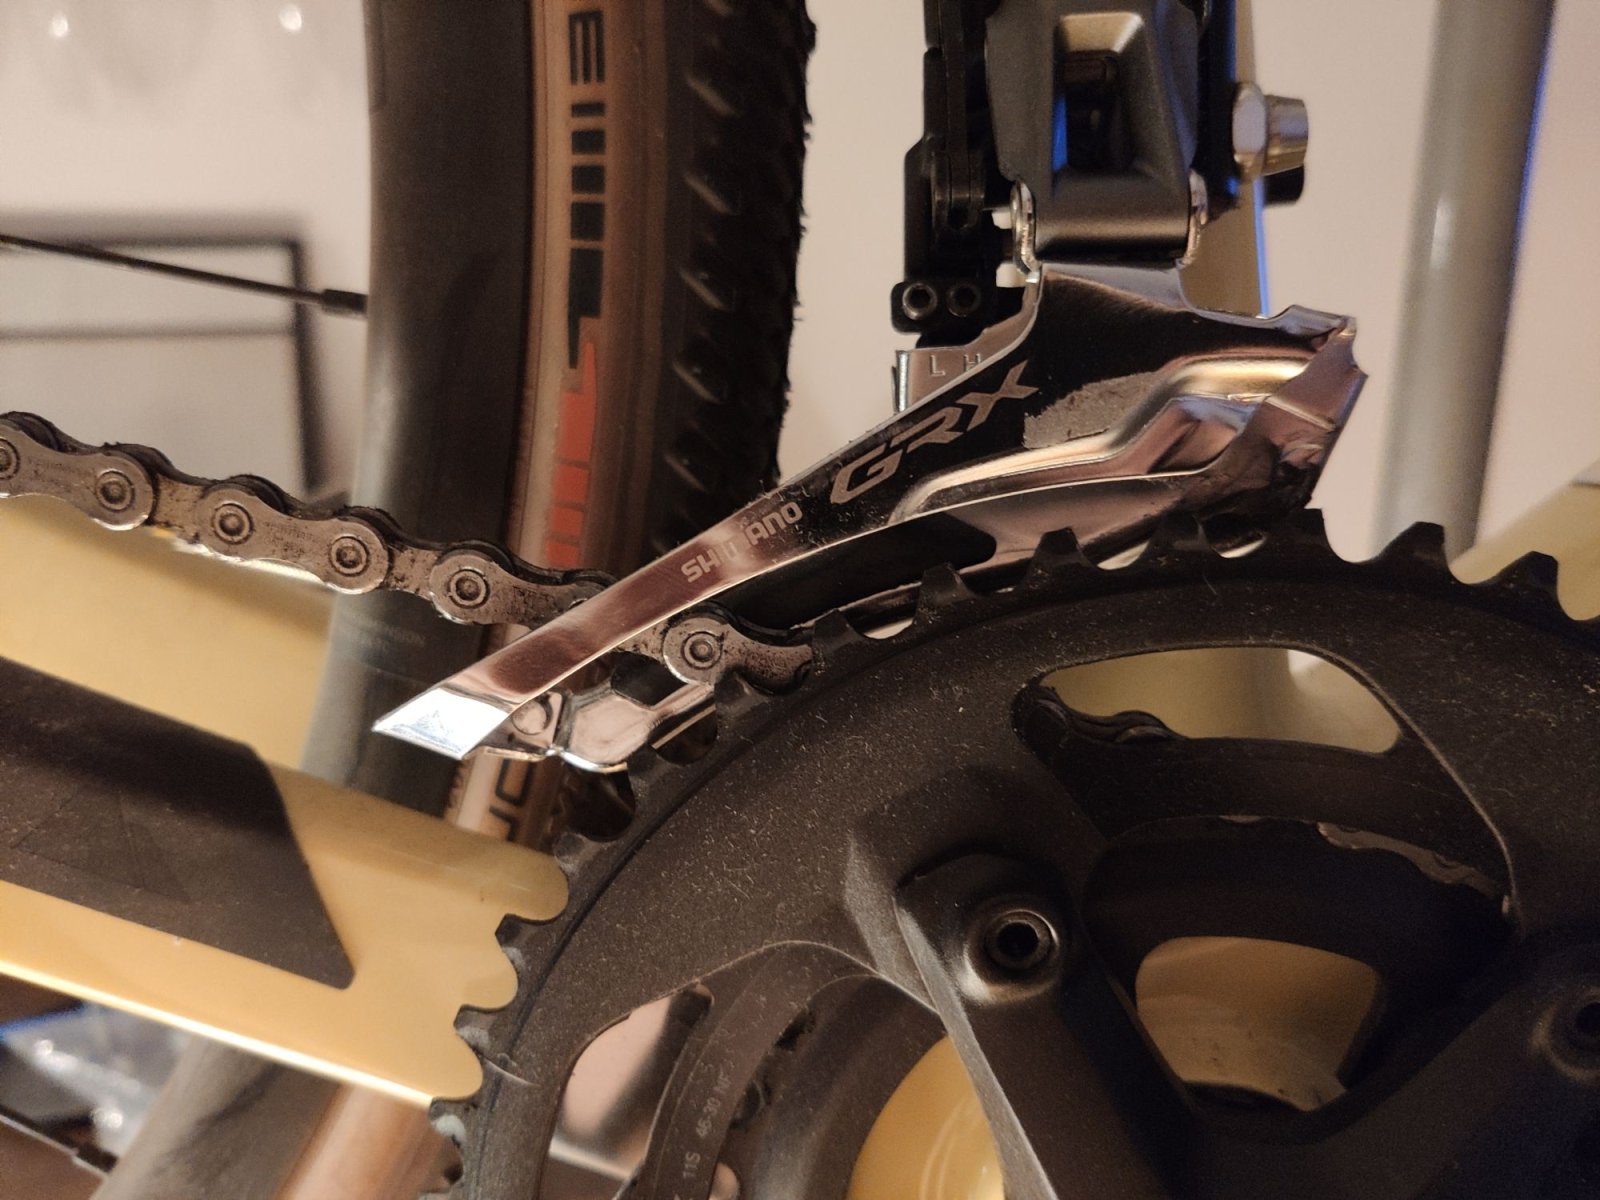 GRX RX810 Umwerfer einstellen | MTB-News.de | IBC Mountainbike Forum